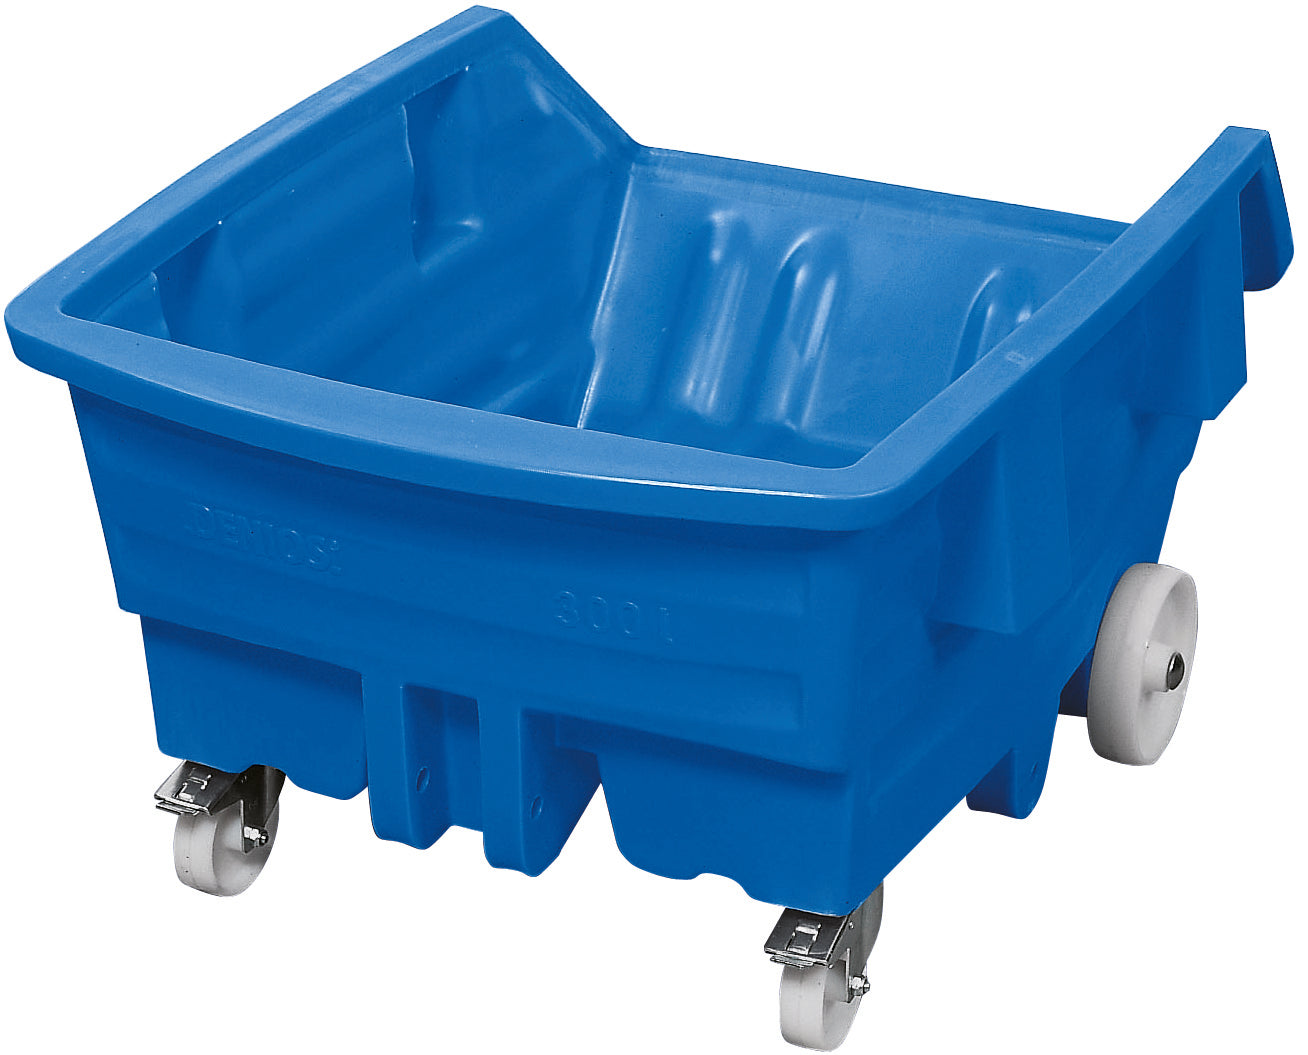 Kippwagen PE Blau mit Rollen, 750 L, 1560x925x1150, Polyethylen